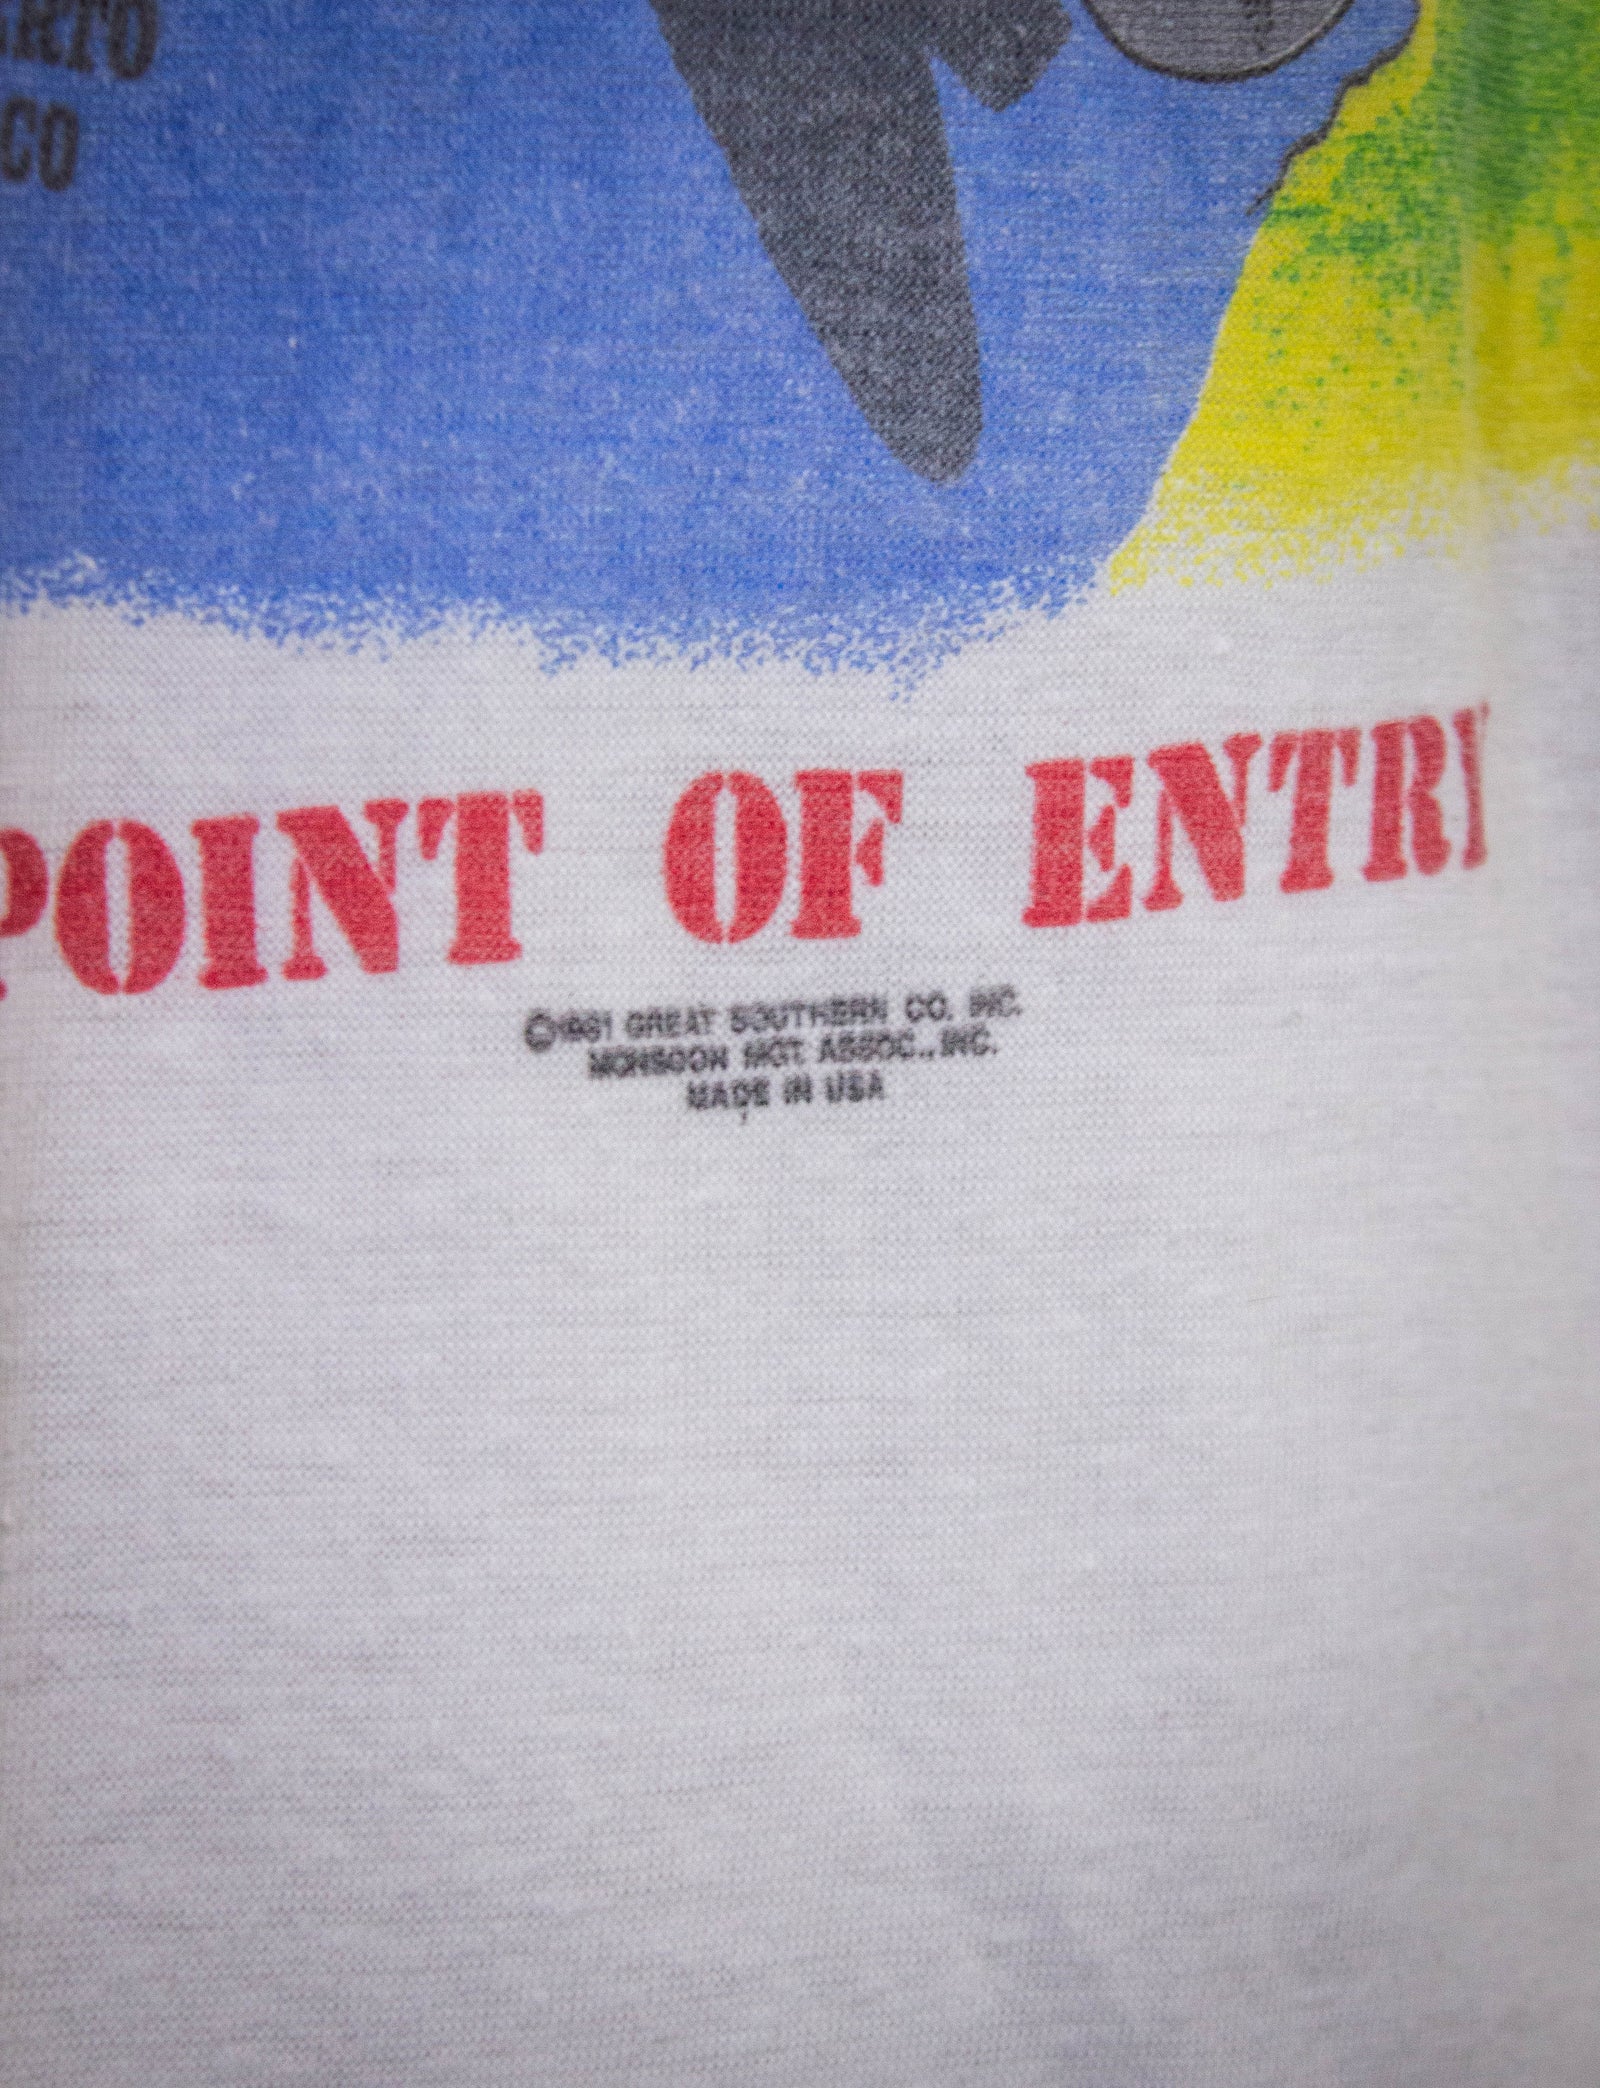 Vintage Judas Priest Point of Entry Raglan Concert T Shirt White/Gray Small